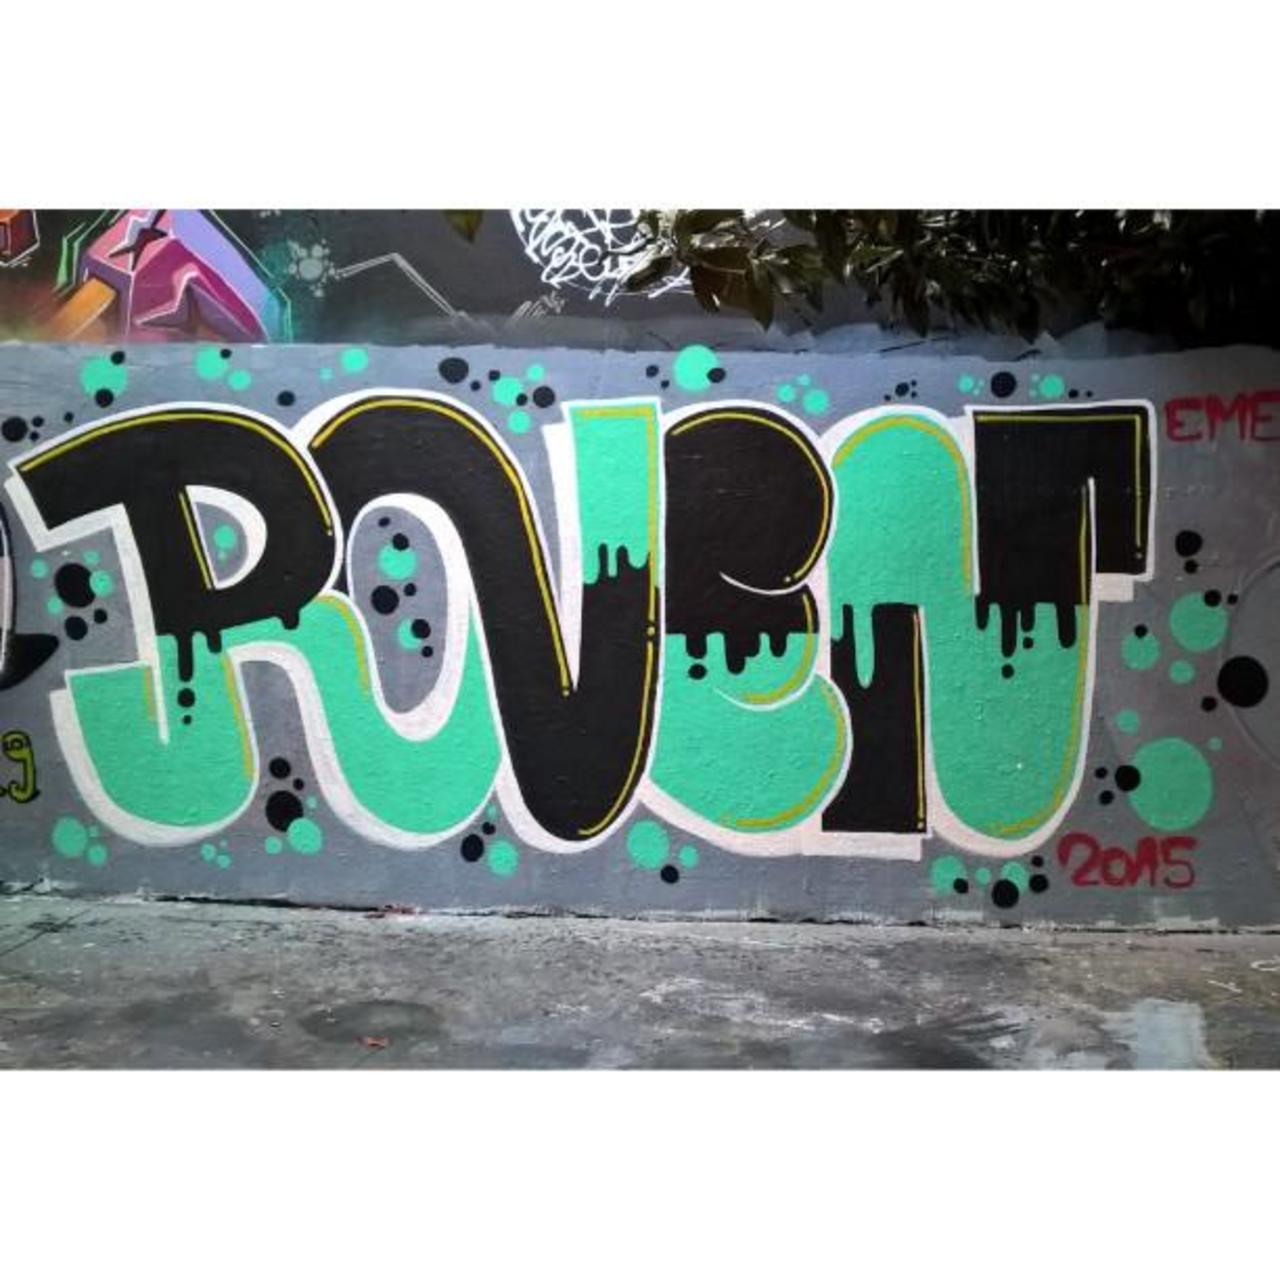 #Paris #graffiti photo by @maxdimontemarciano http://ift.tt/1RNp6Md #StreetArt http://t.co/ROH0ePVmtE